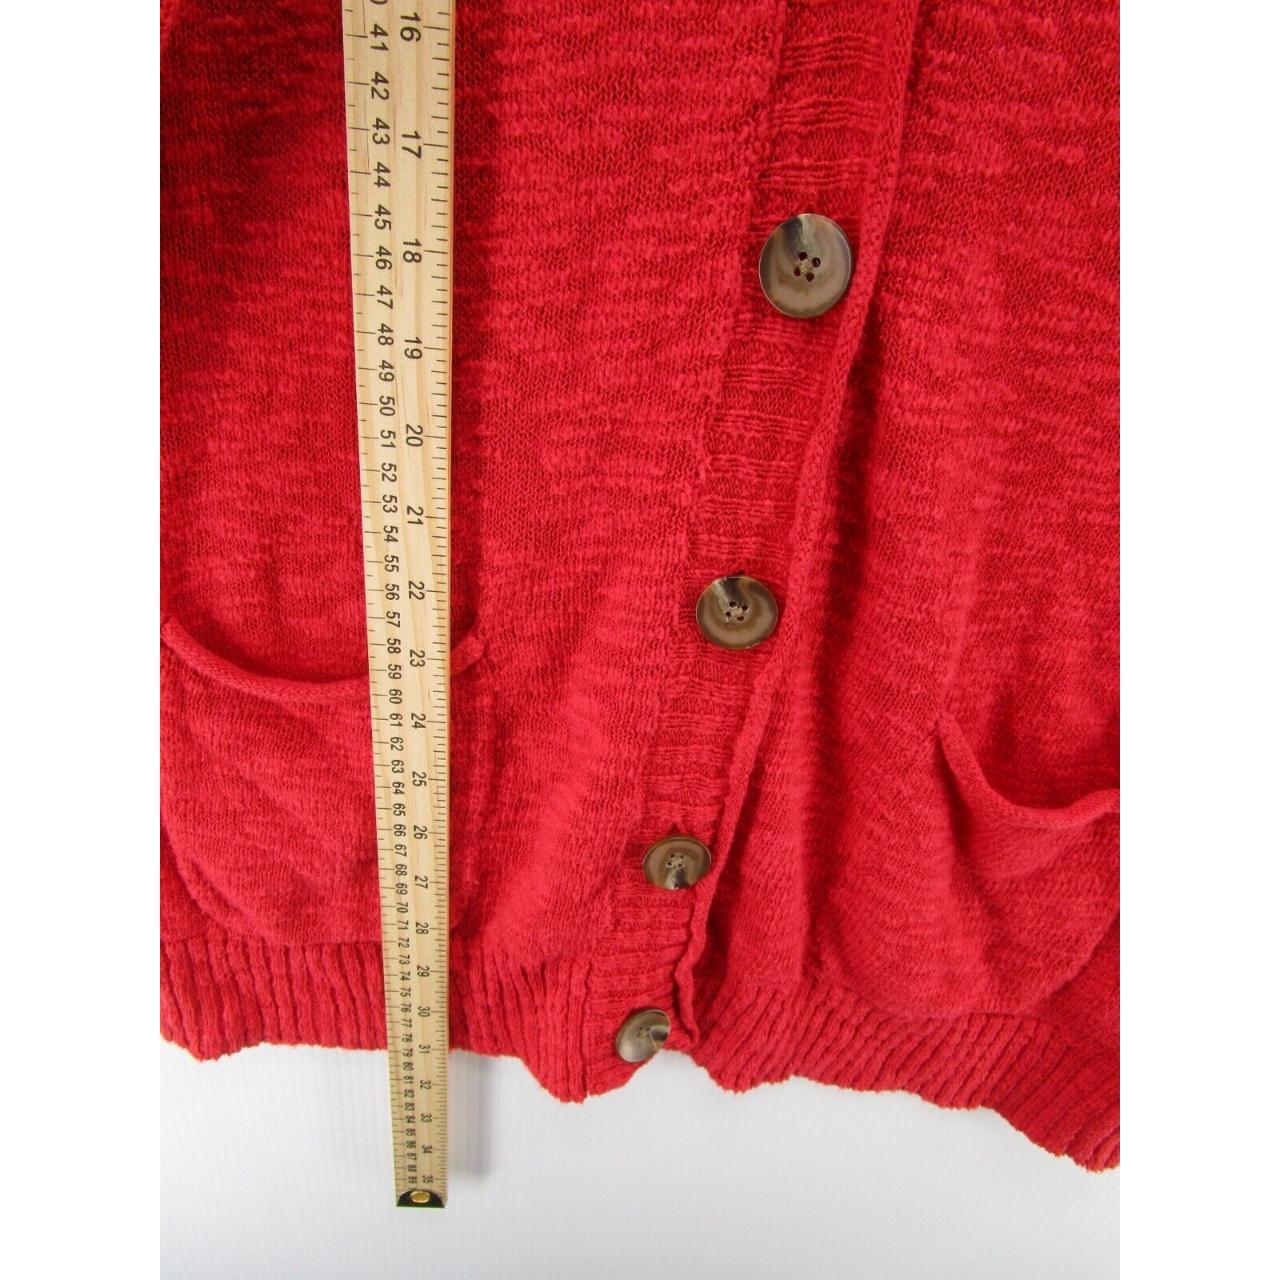 J Jill Sweater Women Large Red Cardigan Button Up - Depop